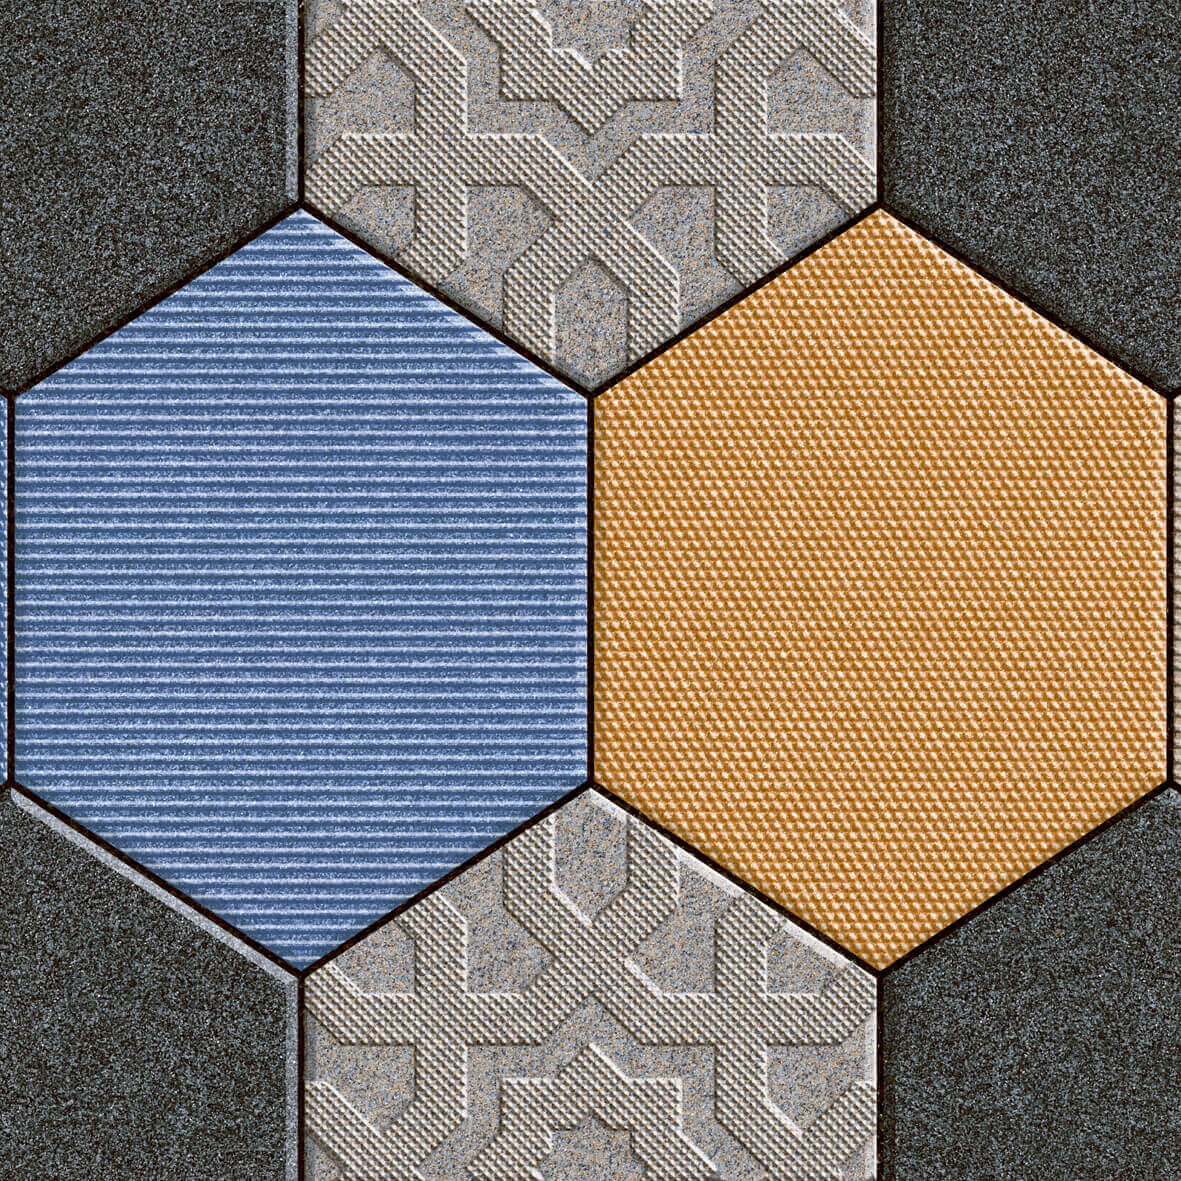 Ivory Tiles for Automotive Tiles